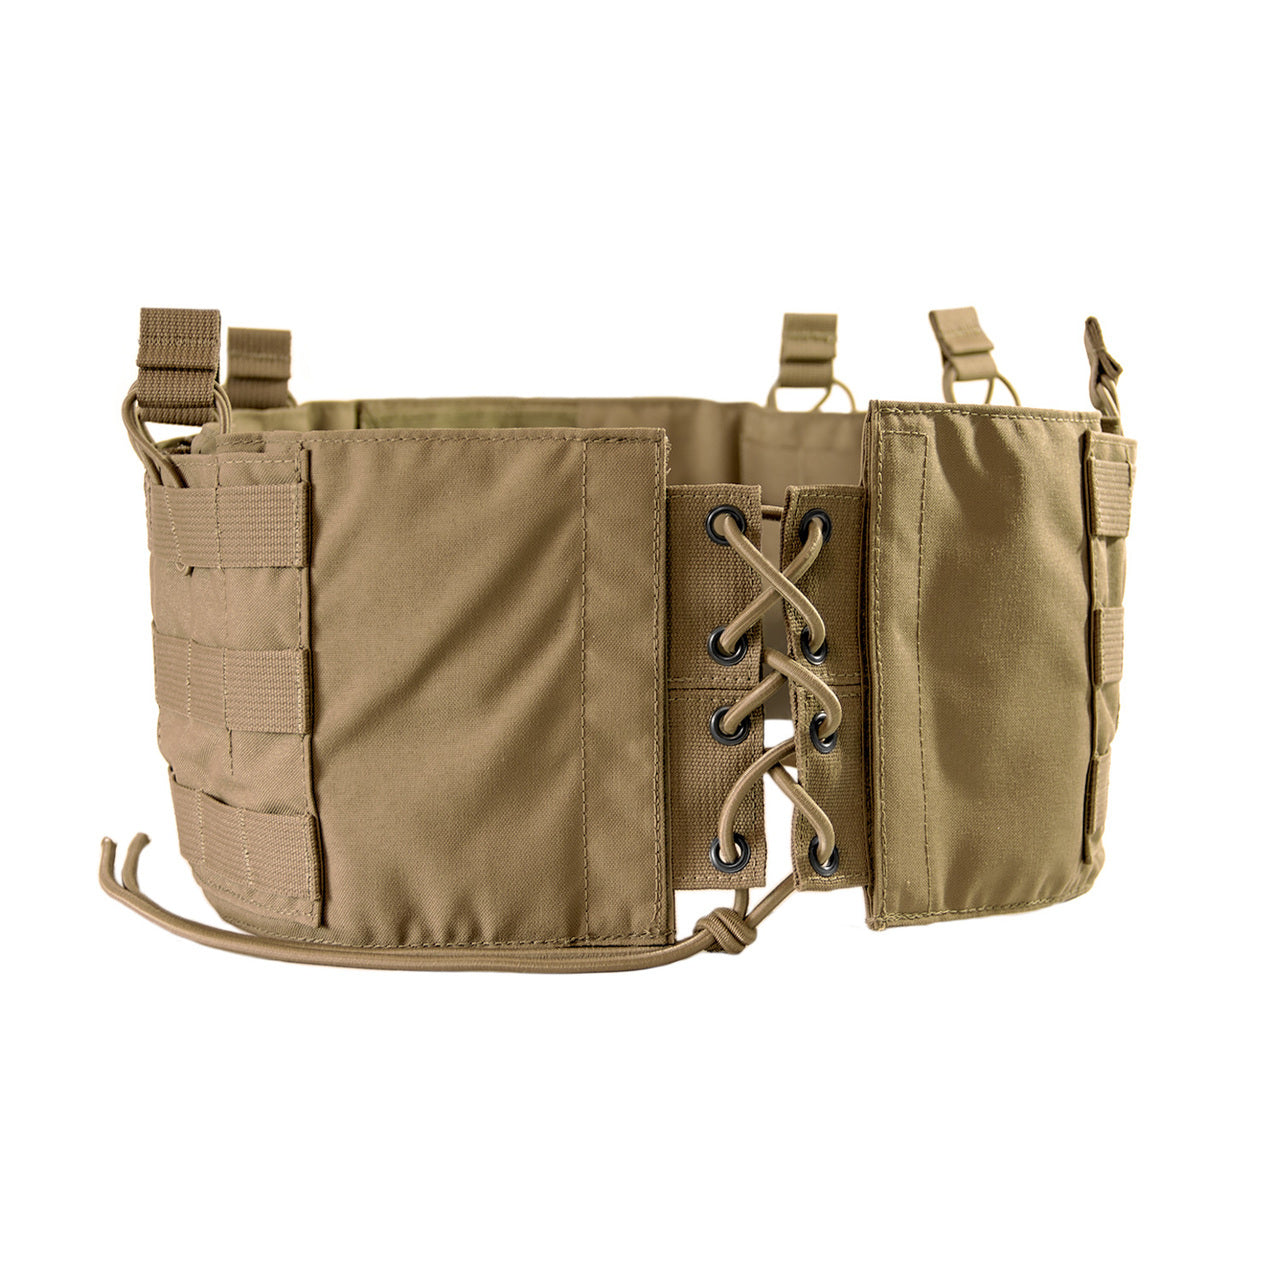 A Shellback Tactical Banshee Elite Cummerbund waist belt with two straps.